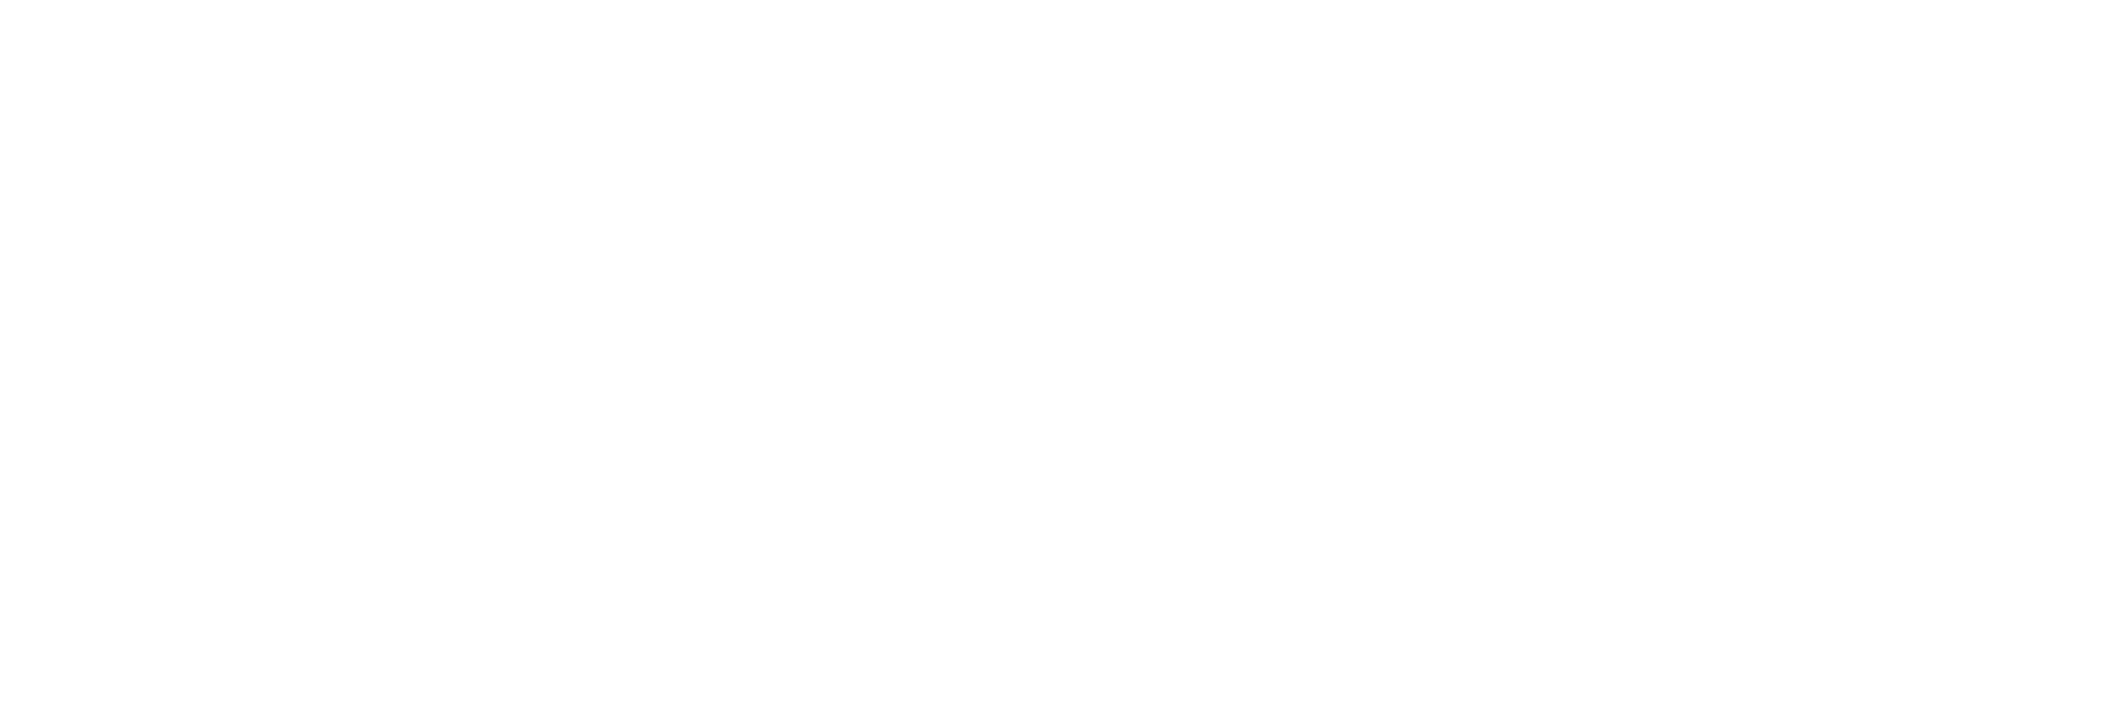 Broomstick logo mainpage